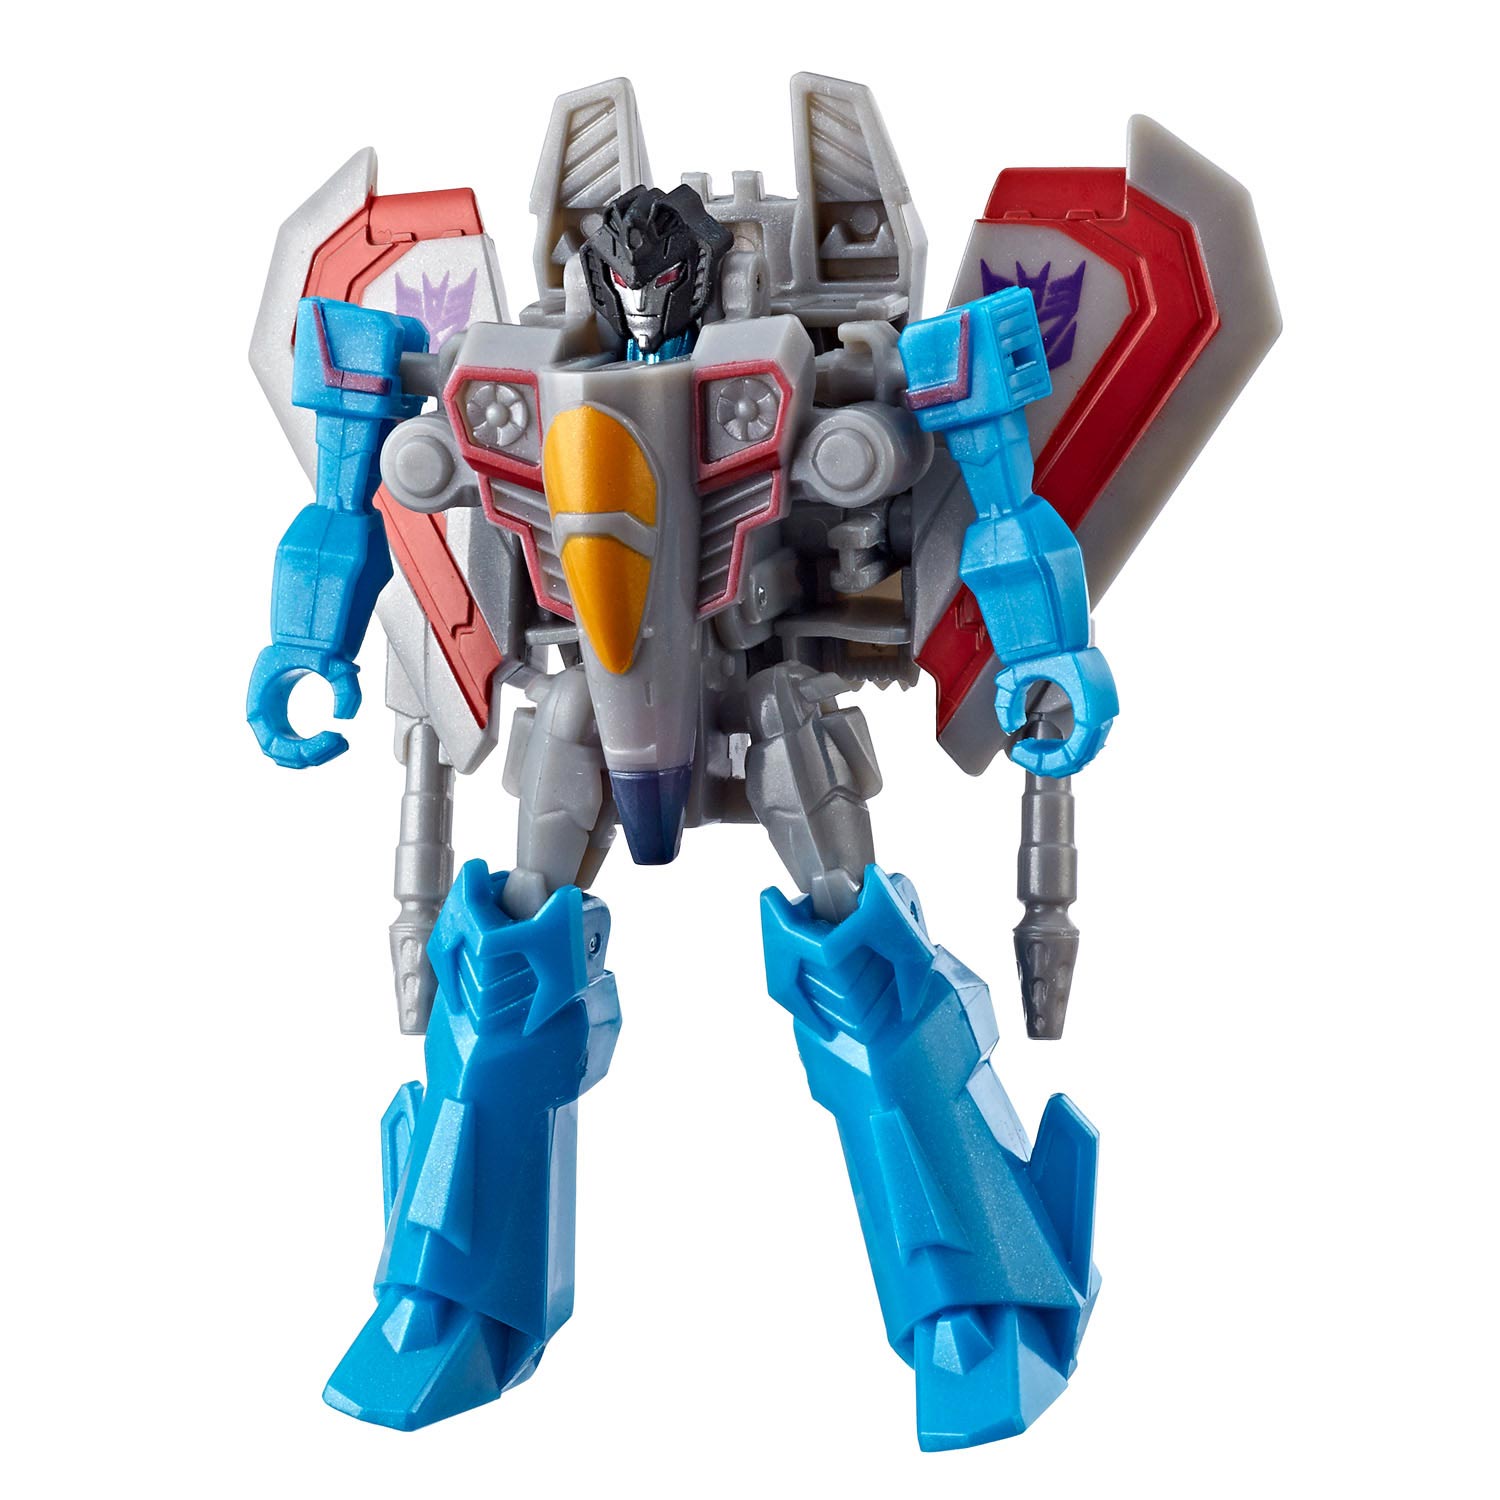 Transformers Cyberverse Scout Class Figuur - Starscream